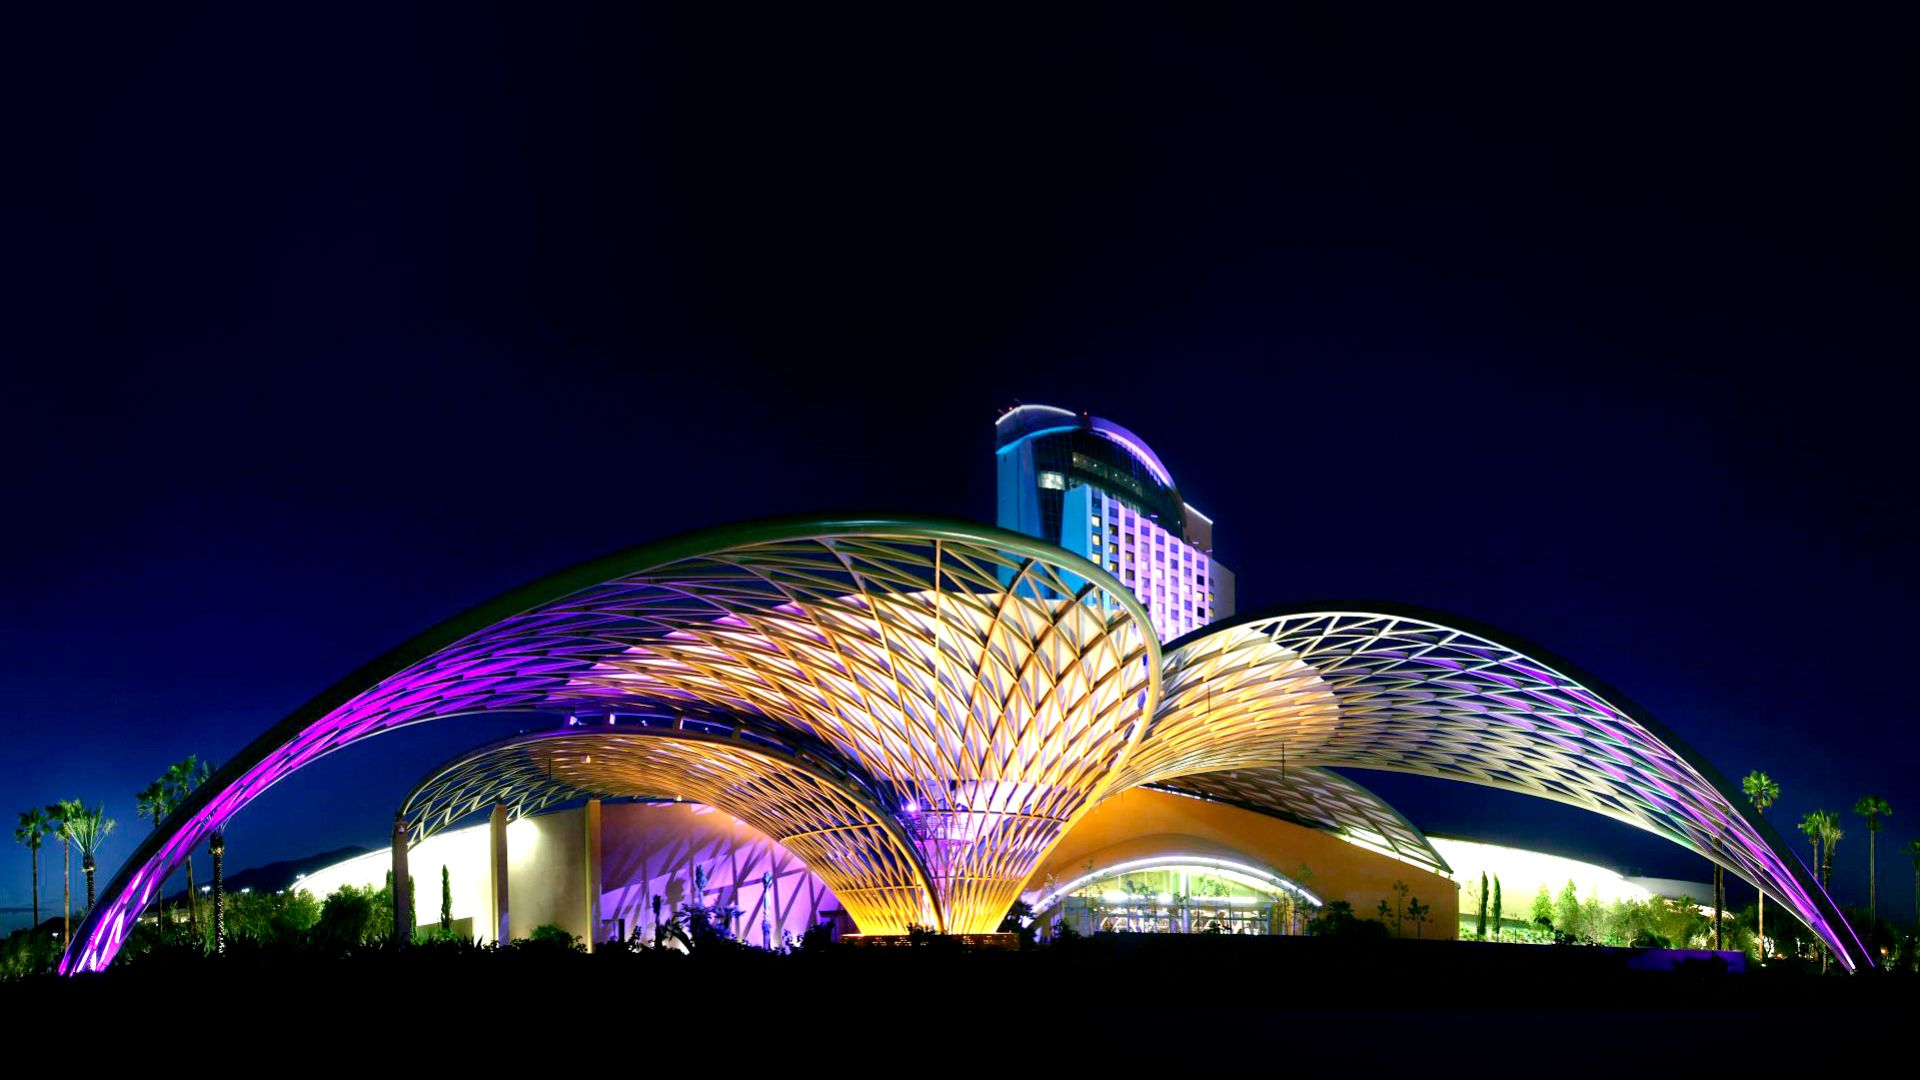 Morongo Casino, Resort & Spa With Lights